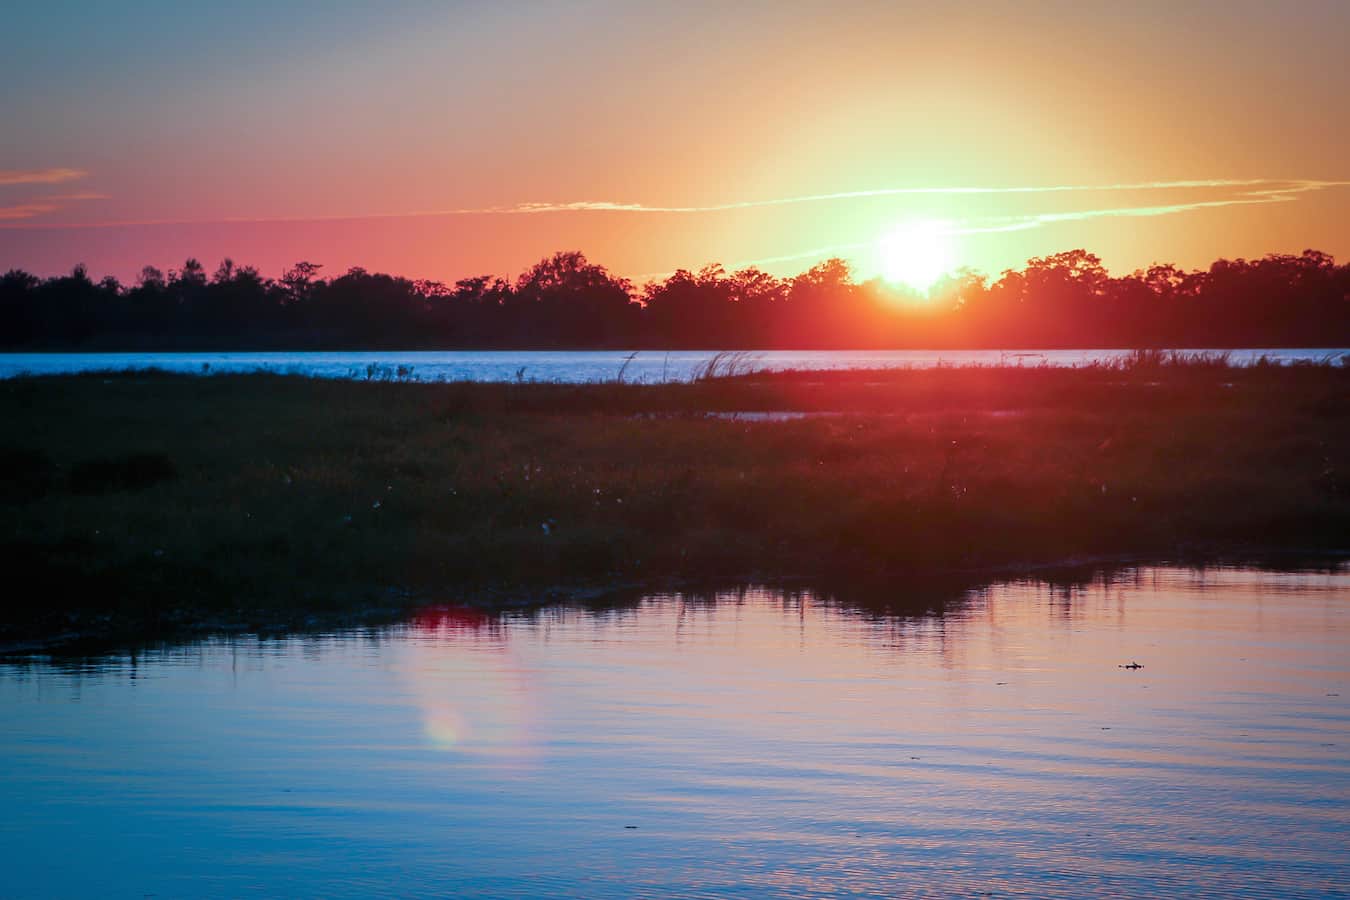 Sunset in Mobile Bay, Alabama